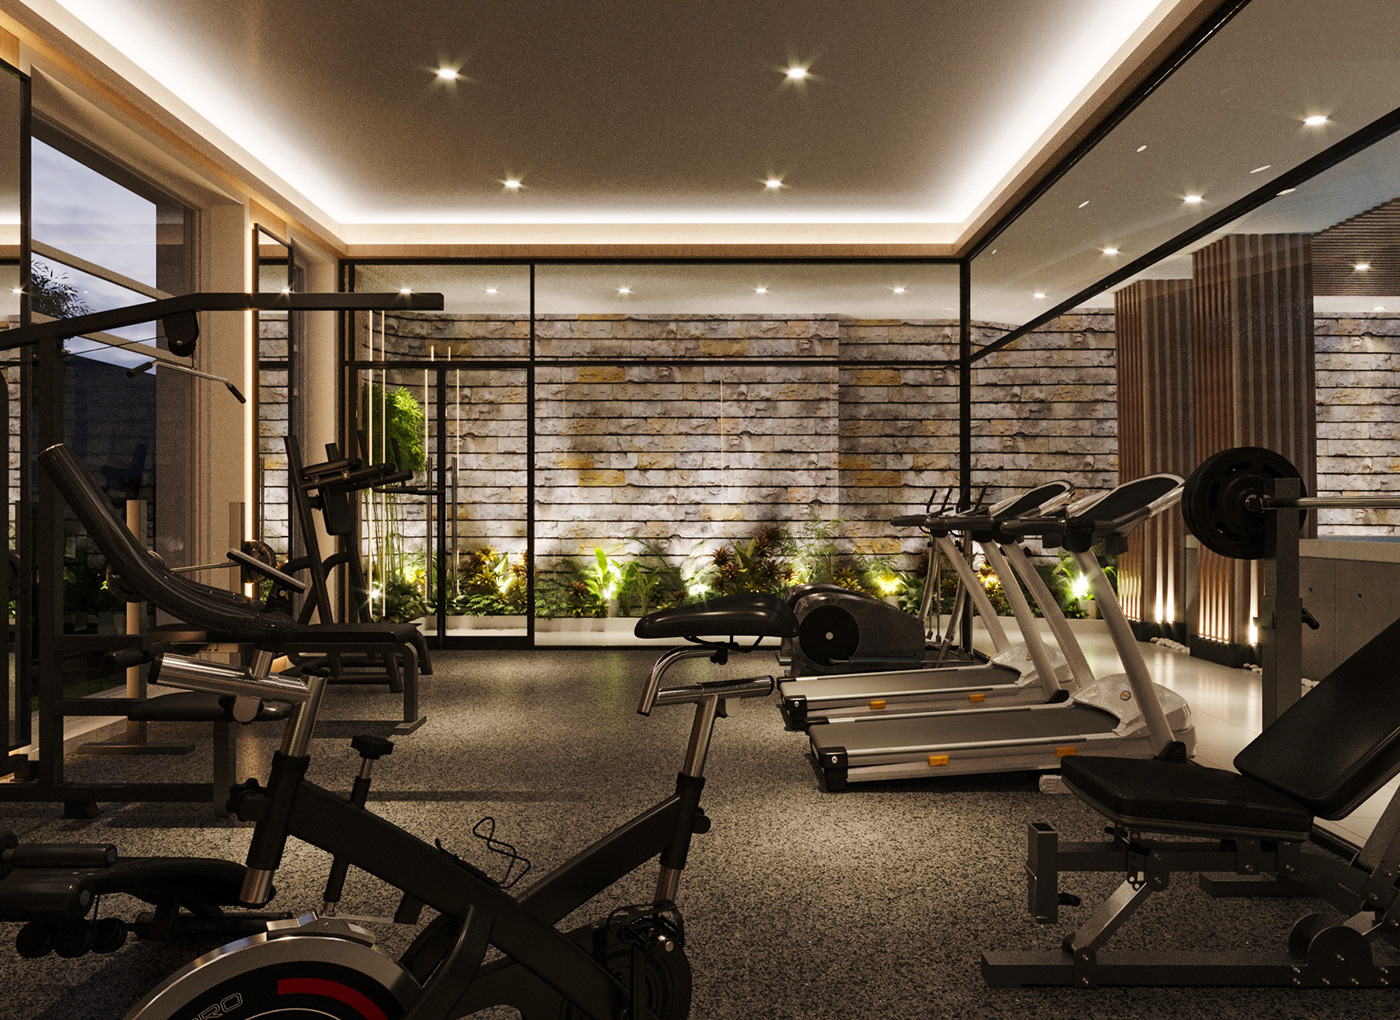 Premium Photo | Gym room fitness center interior with equipment and machines